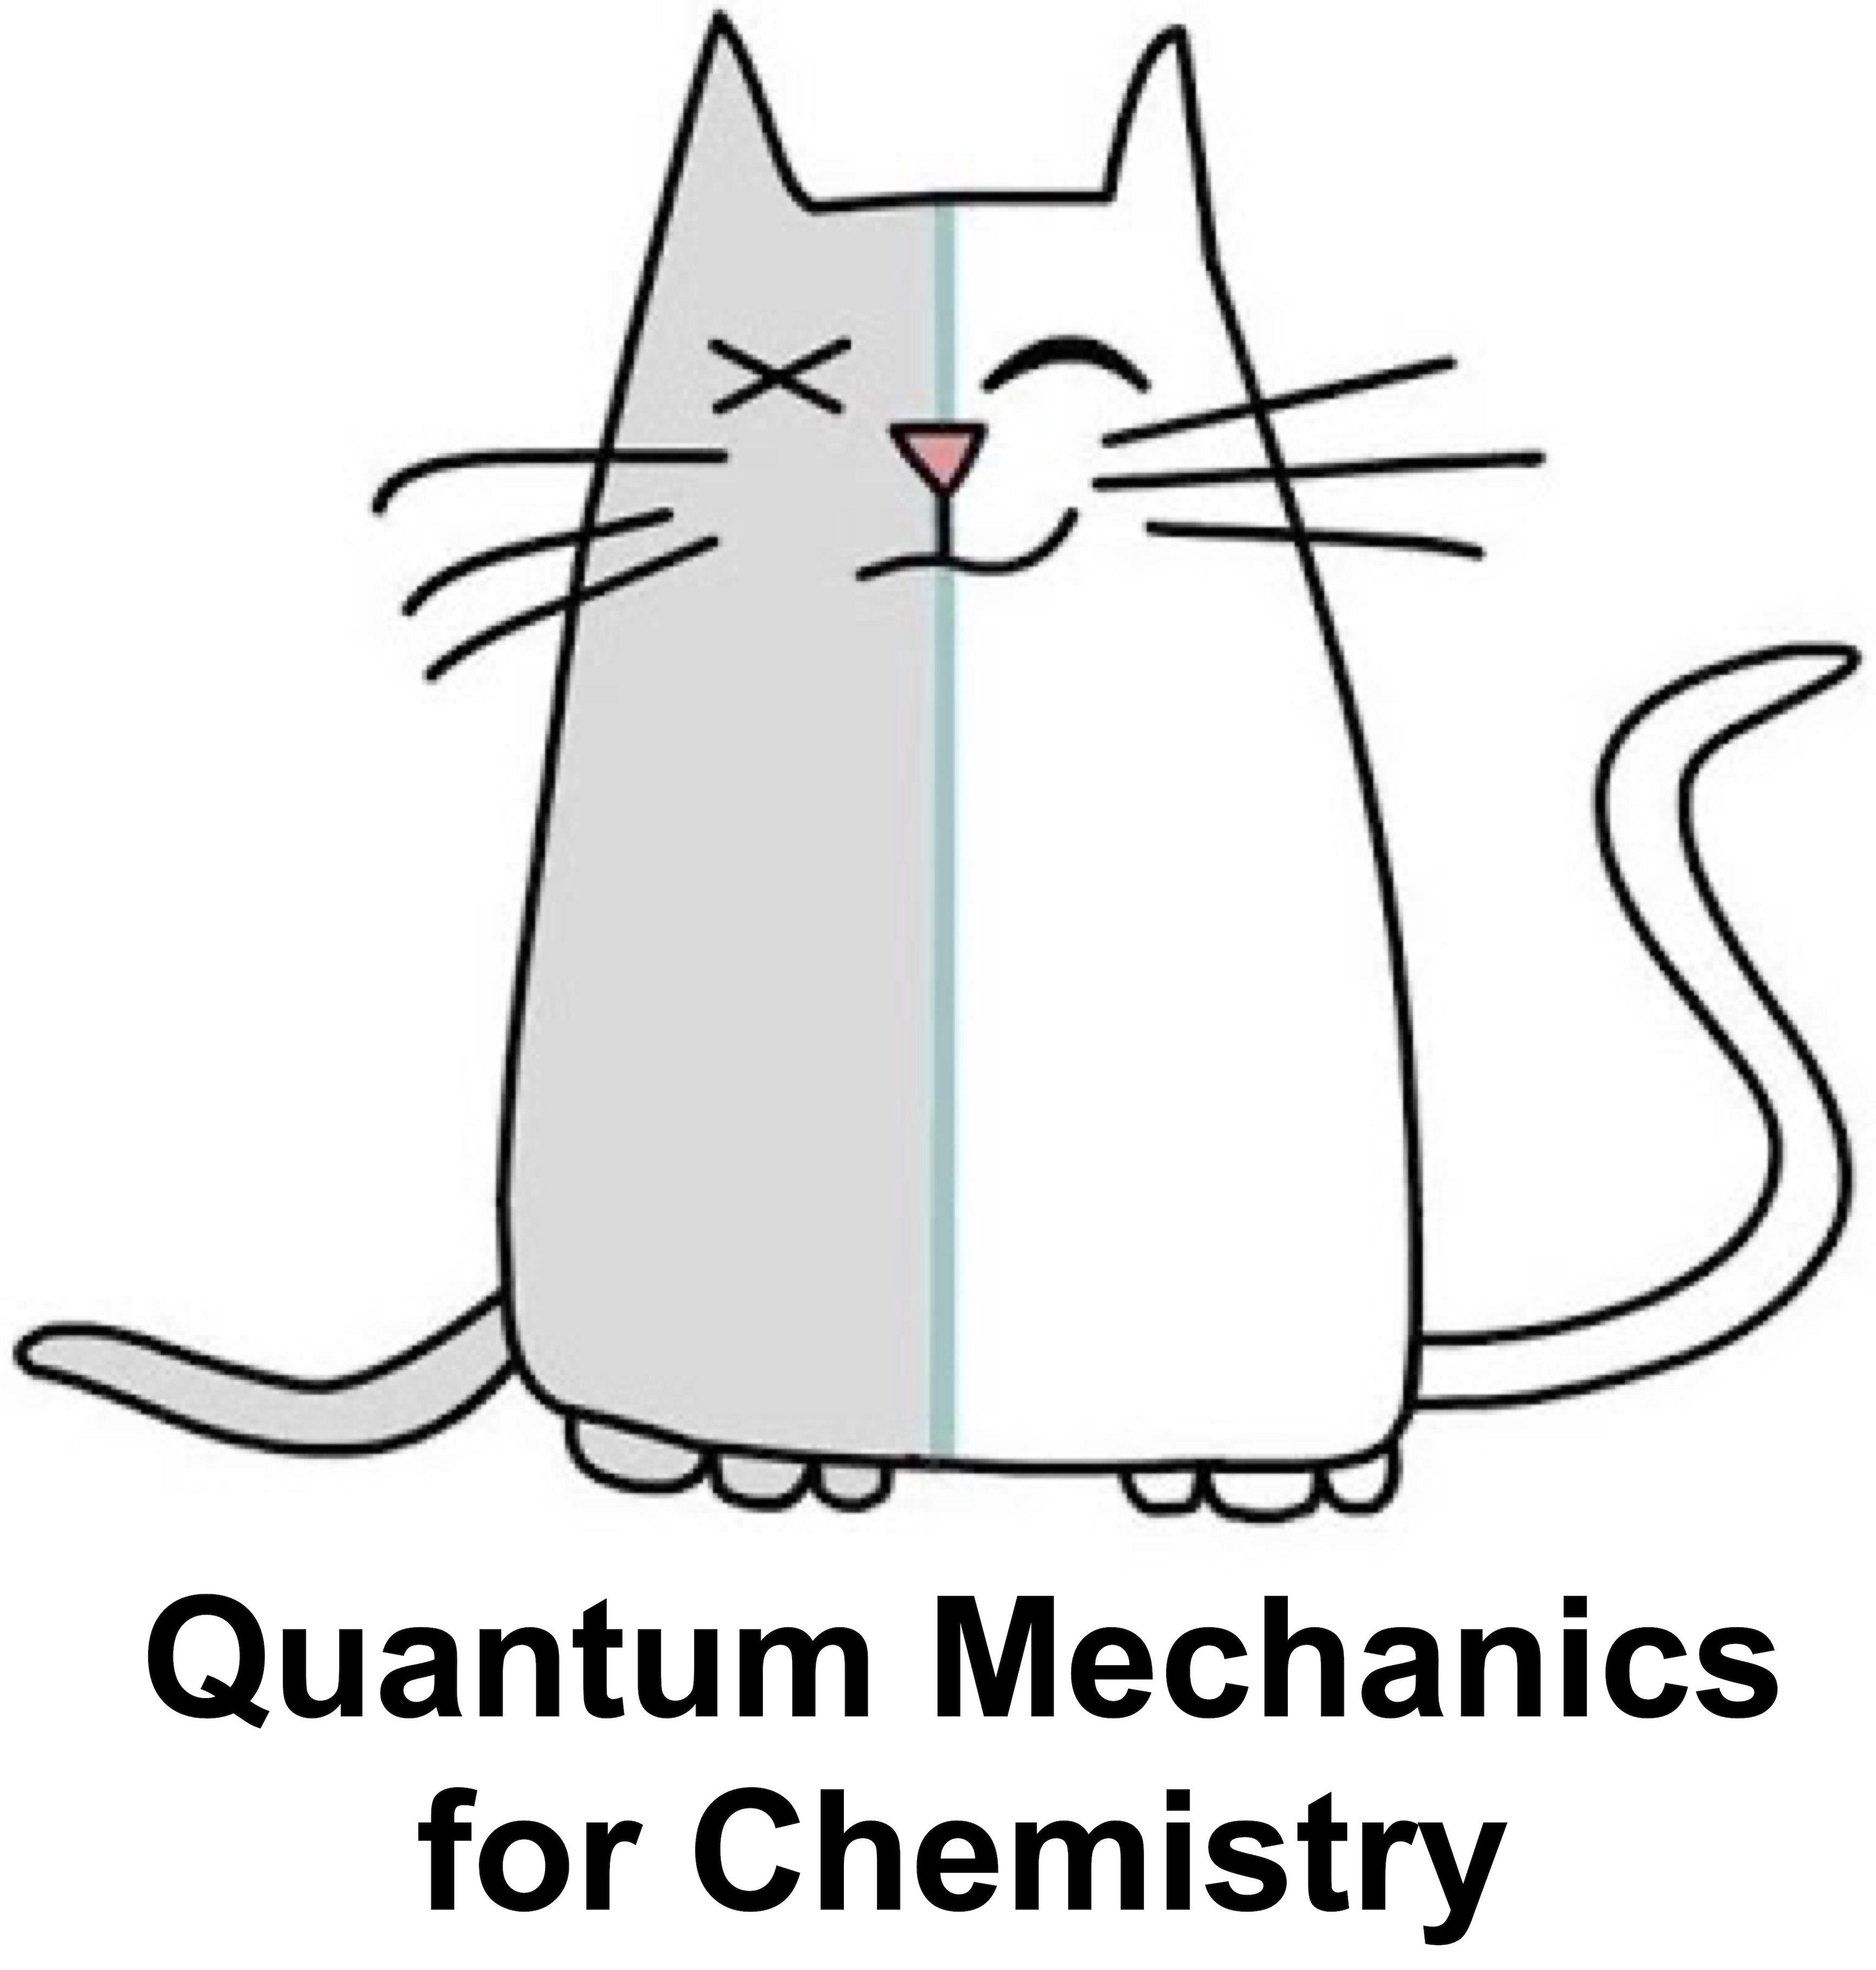 Overview — Quantum Mechanics for Chemistry